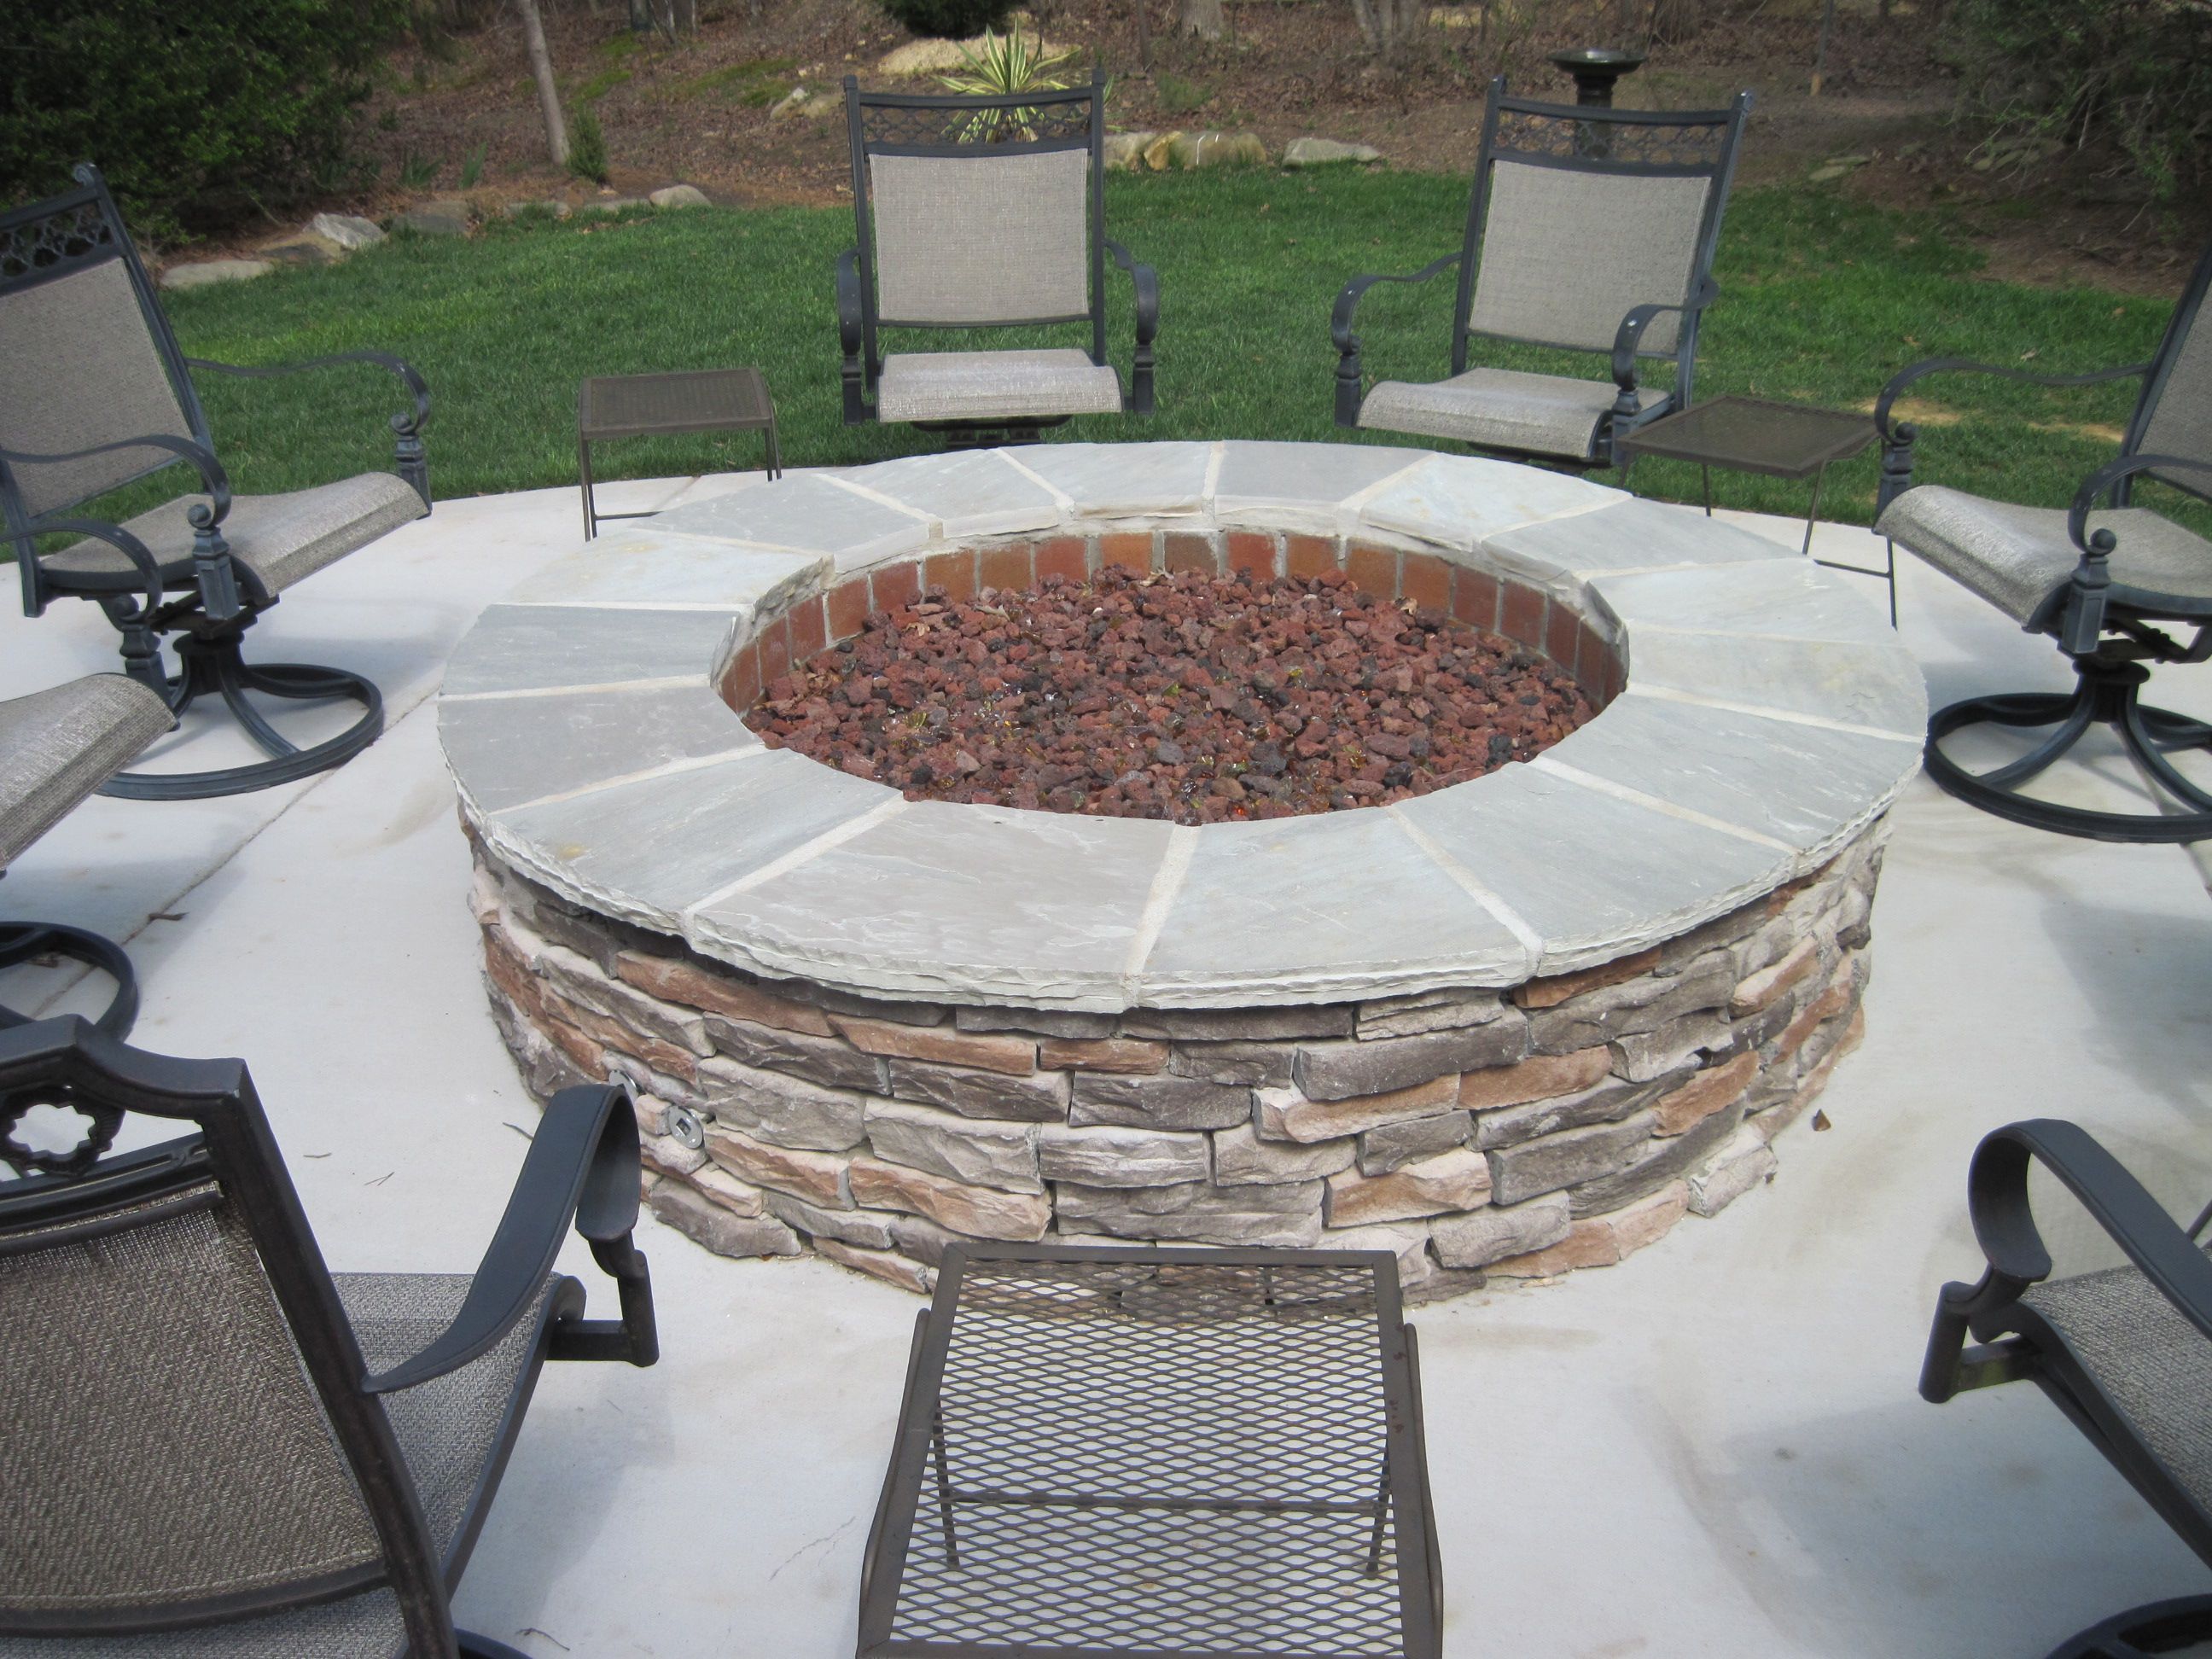 Allen Electric Fireplace Inspirational Pin On Backyard Beauty